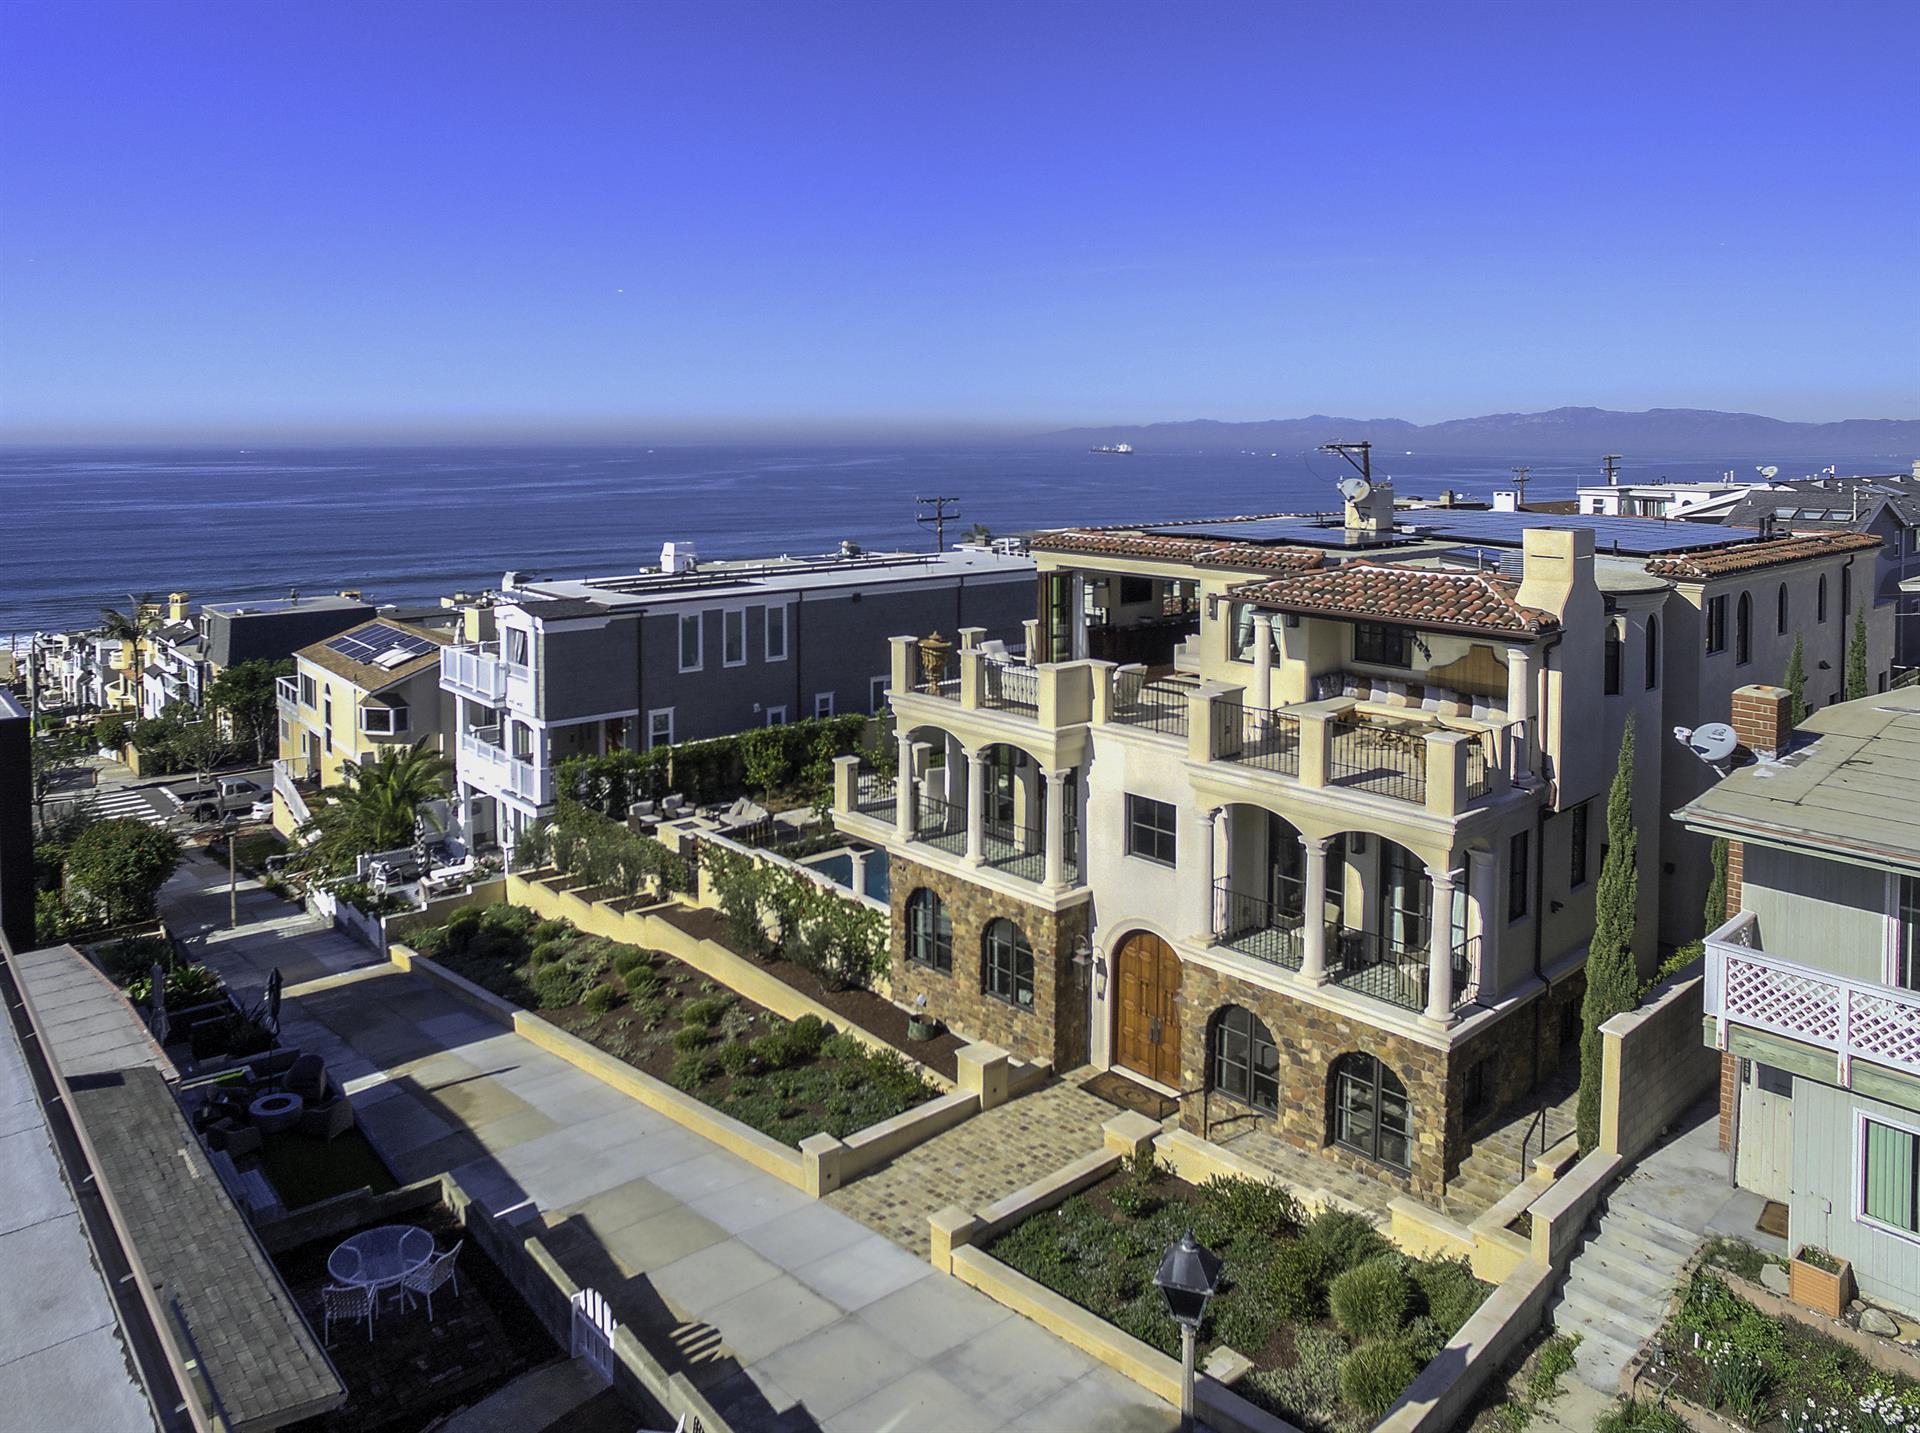 Family Hotels In Manhattan Beach California - 33 DESIGN Ideas You have